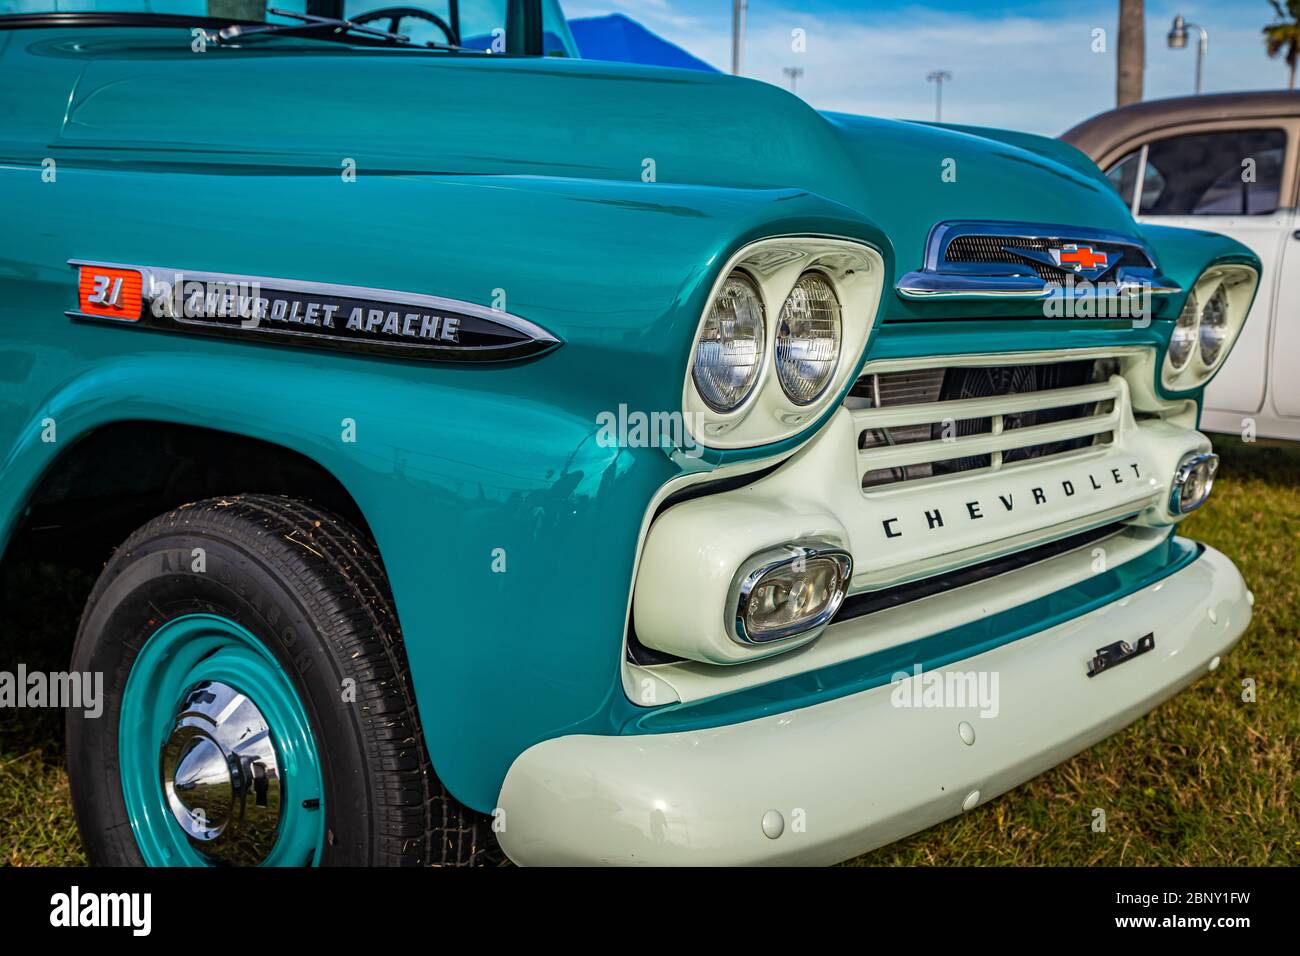 Daytona Beach, FL / USA- November 24, 2018: Green 1959 Chevrolet Apache pickup truck at the Fall 2018 Daytona Turkey Run. Stock Photo